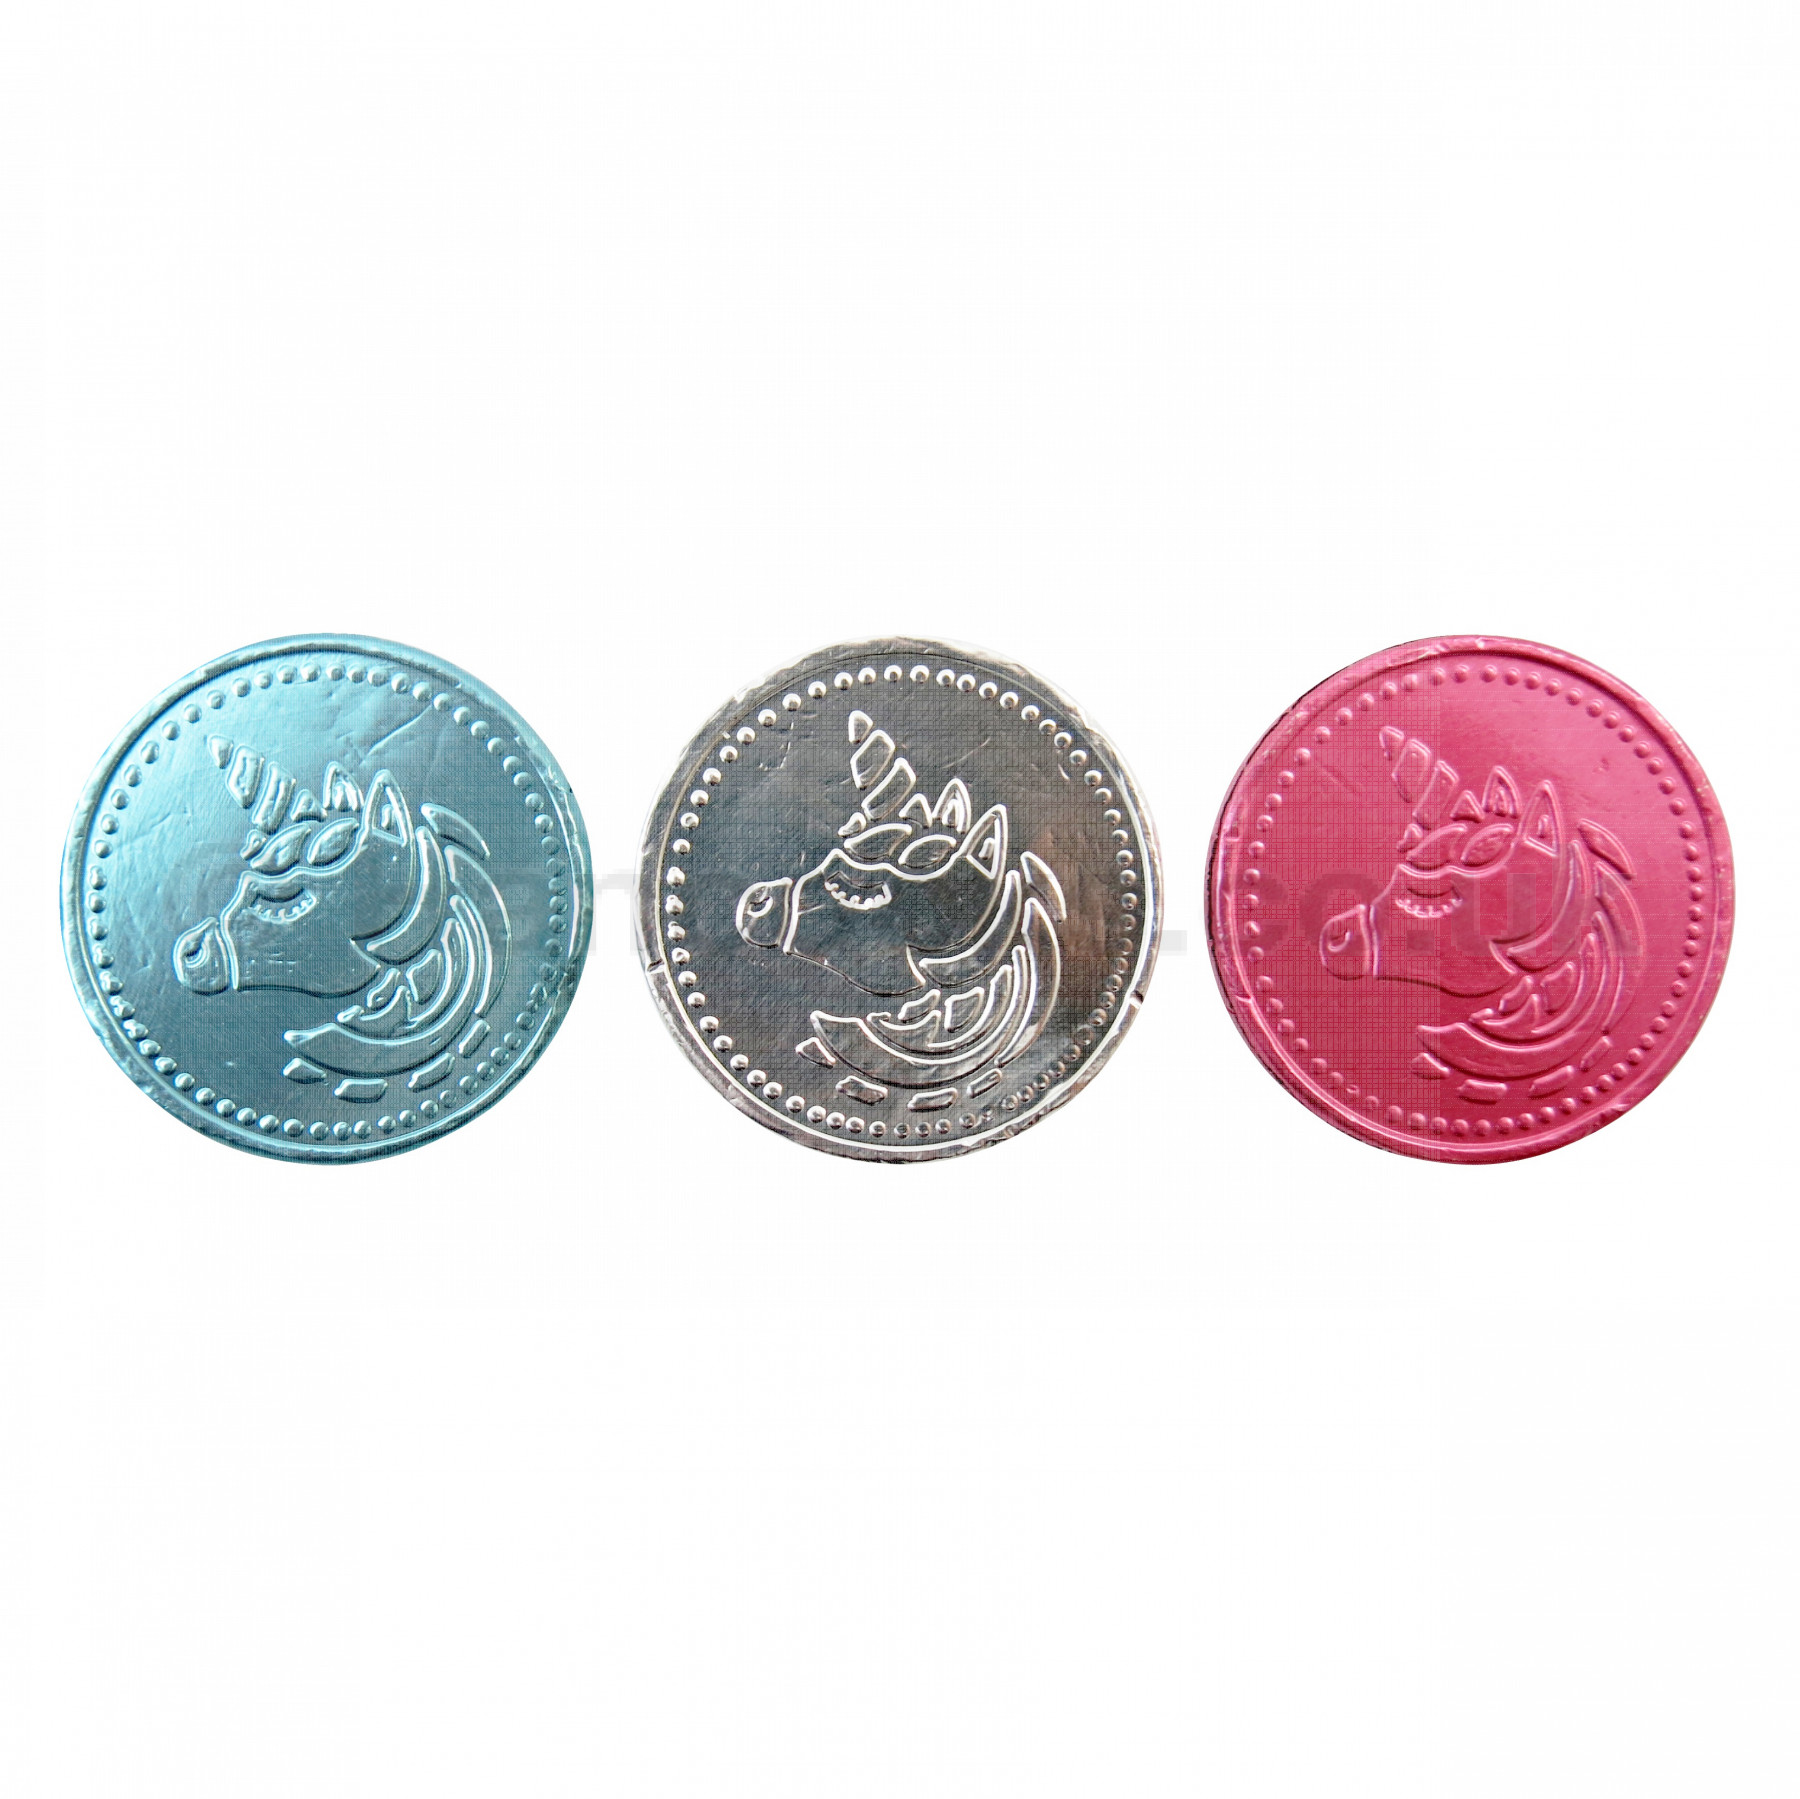 chocolate unicorn coins